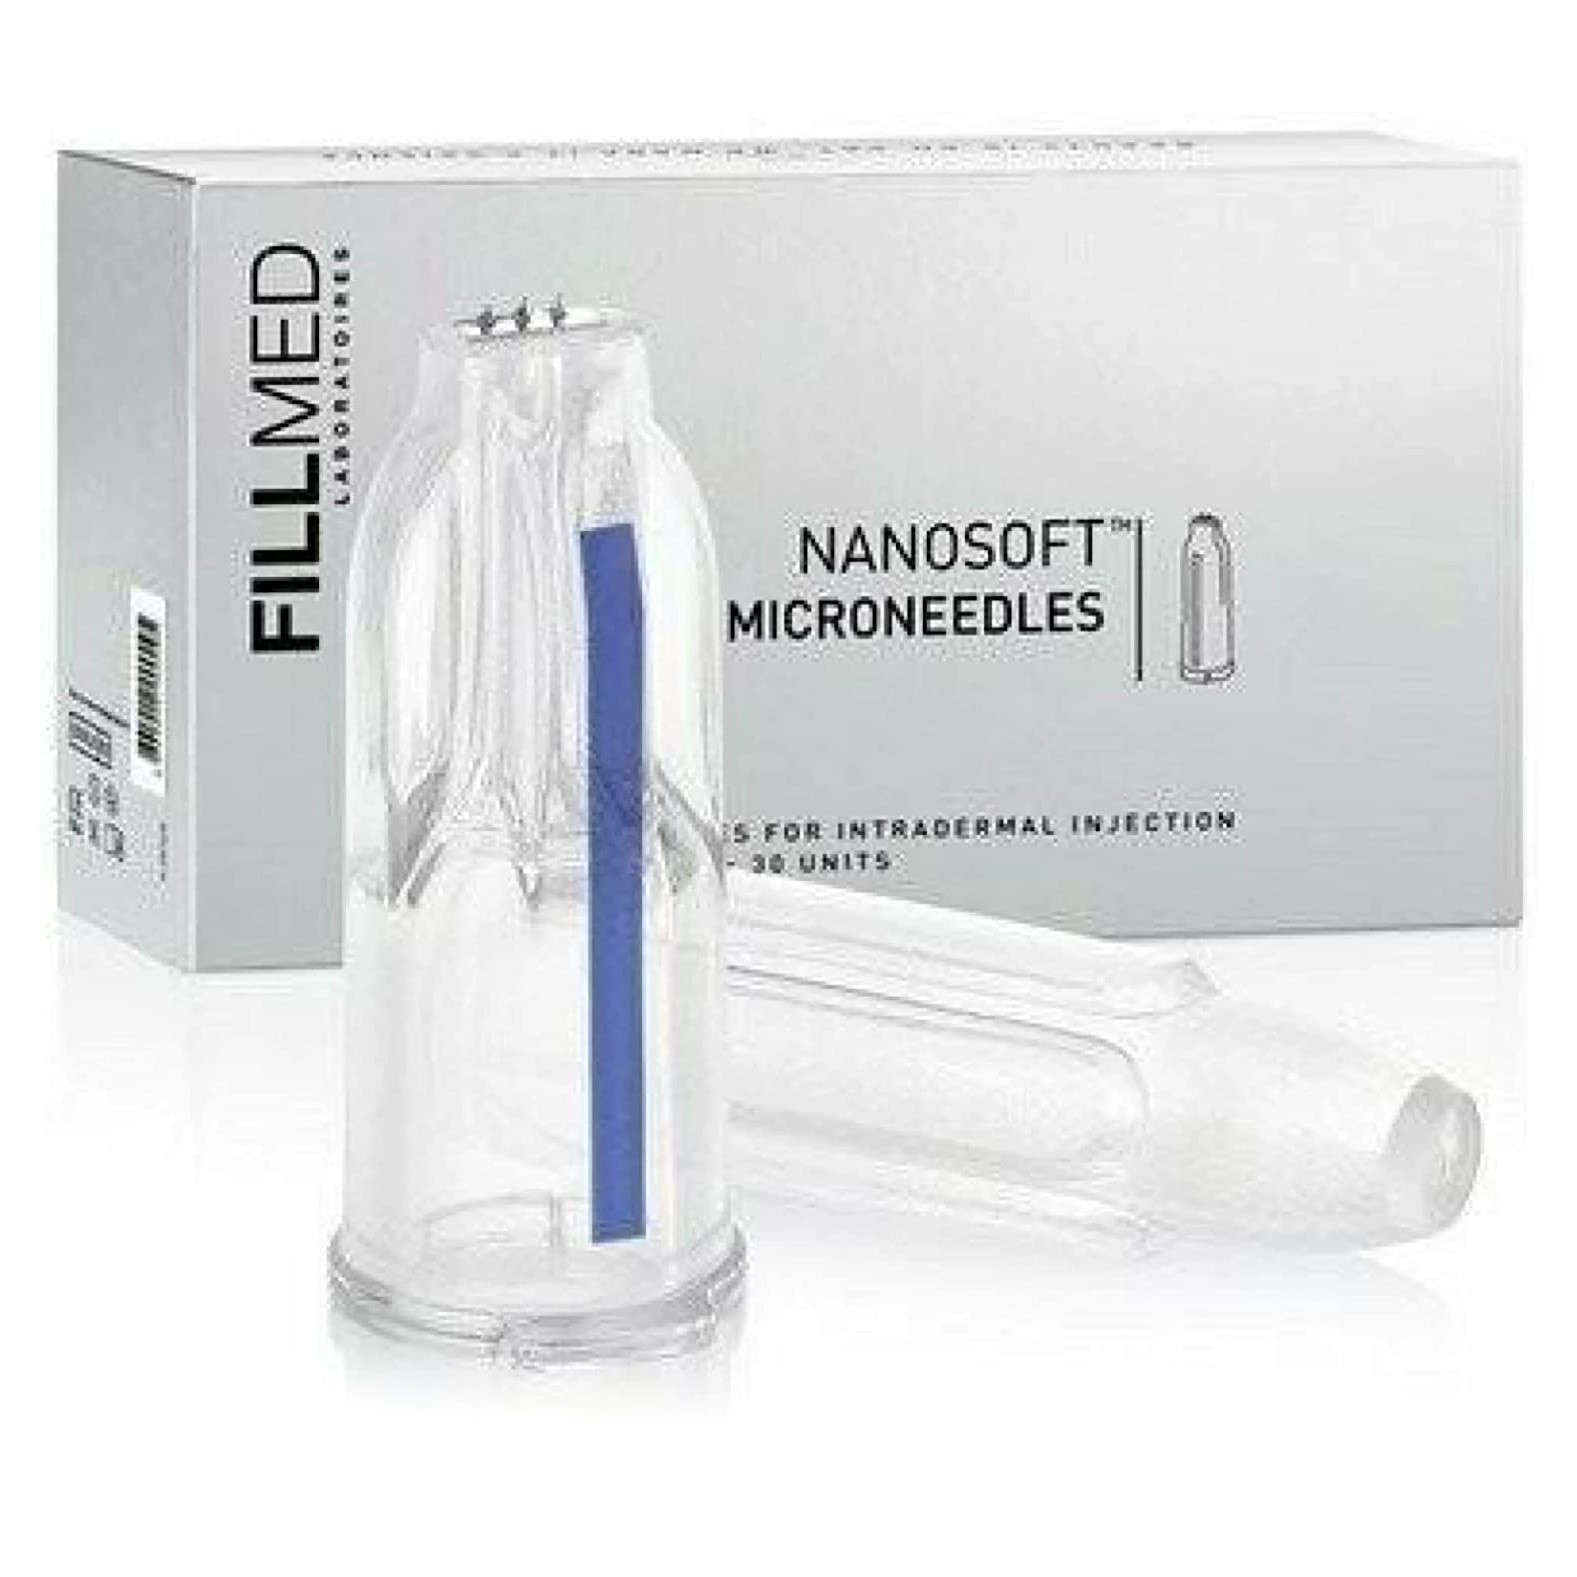 Fillmed - Nanosoft 